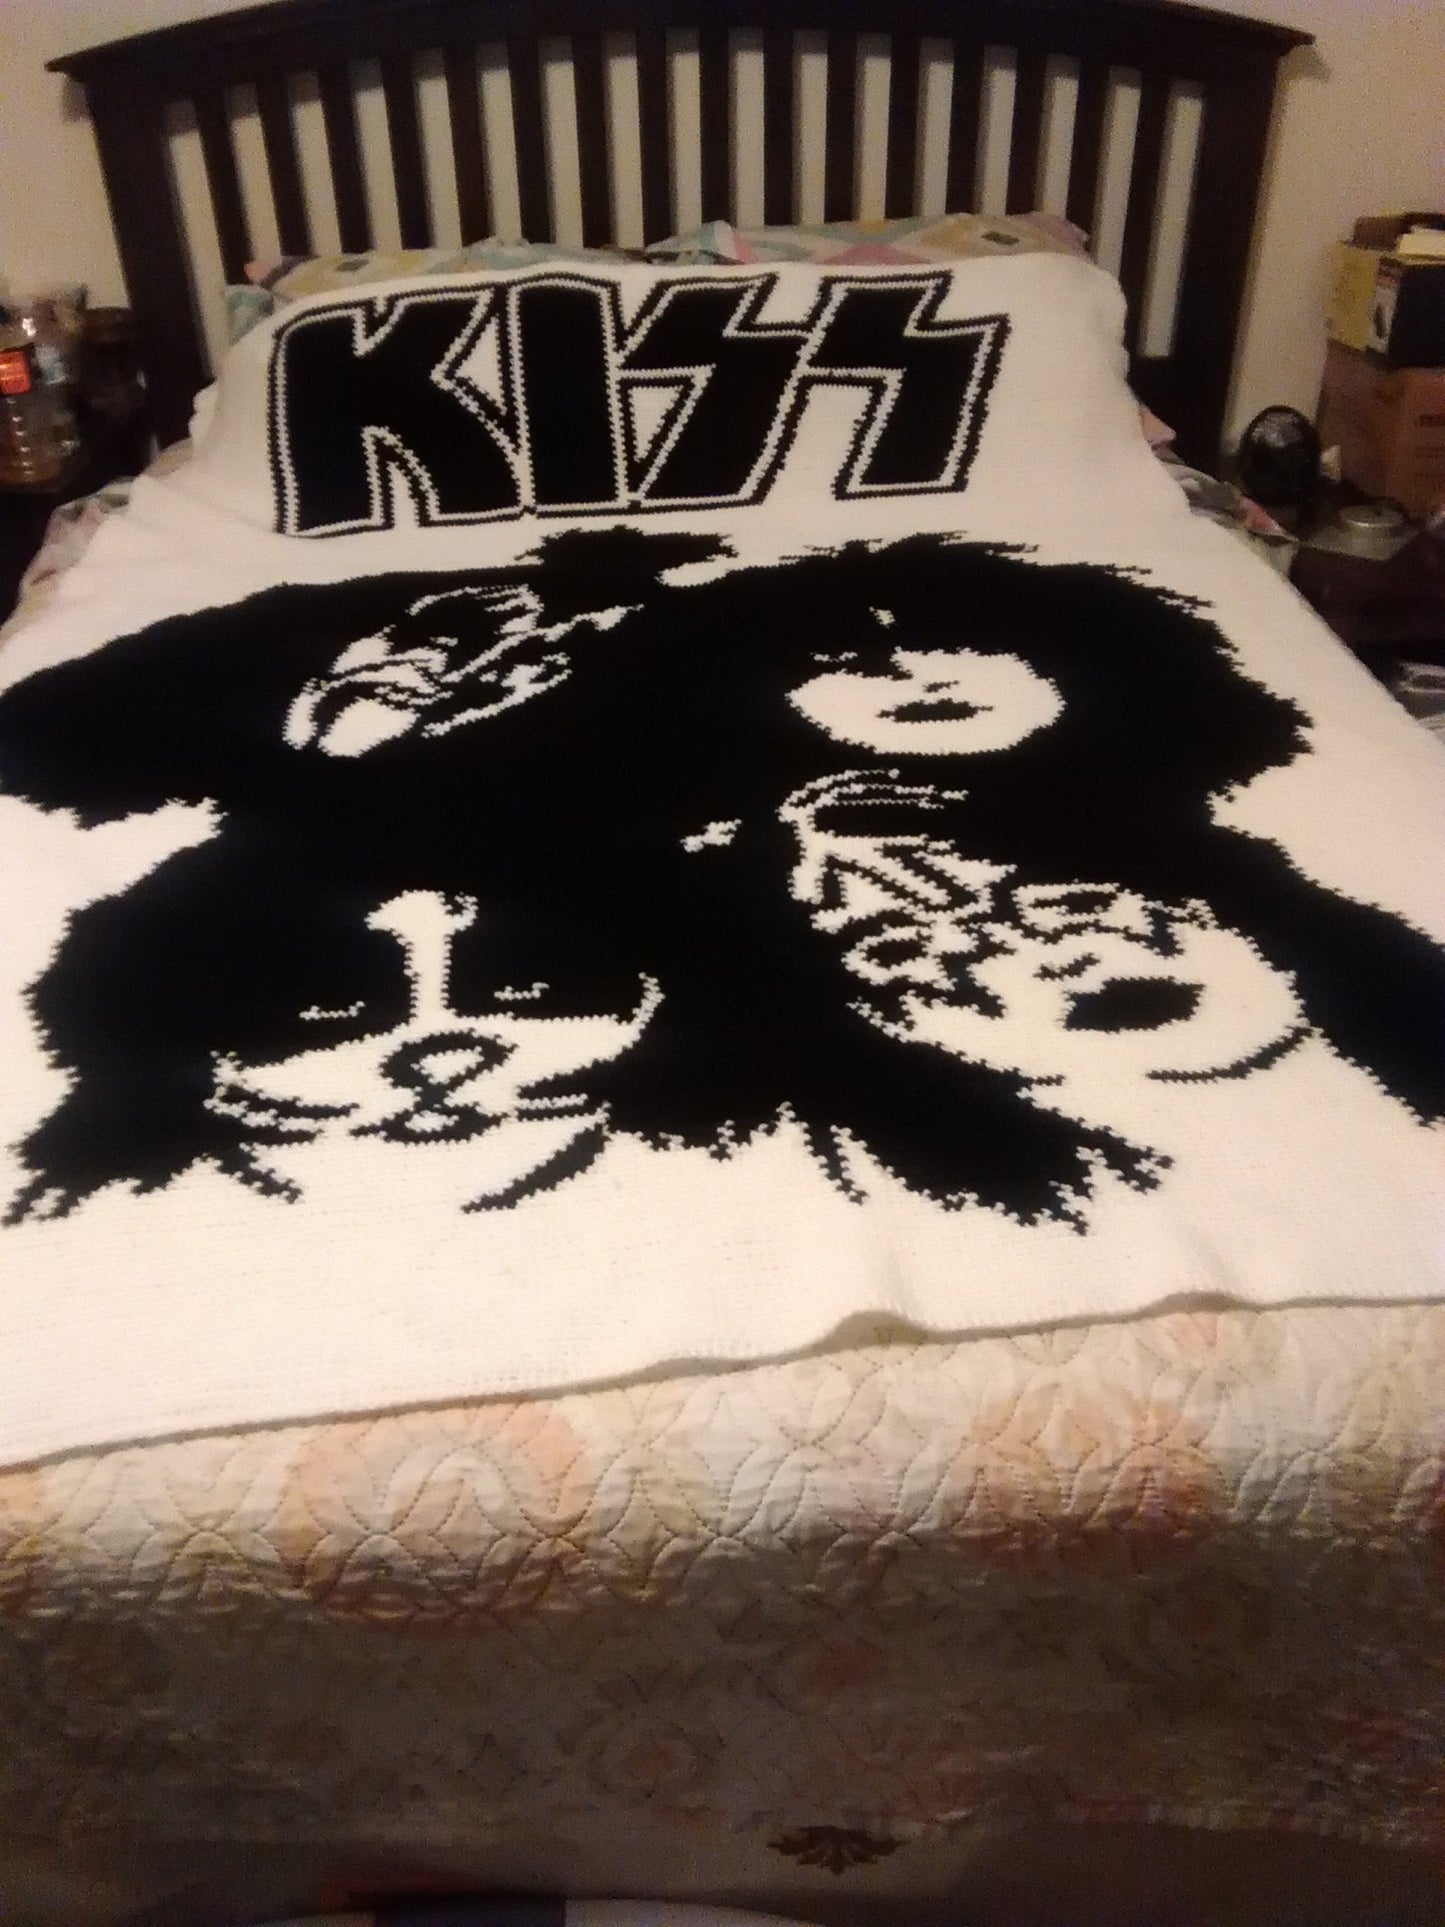 Kiss Band Inspired Graphghan Crochet Pattern SC 200 x 300